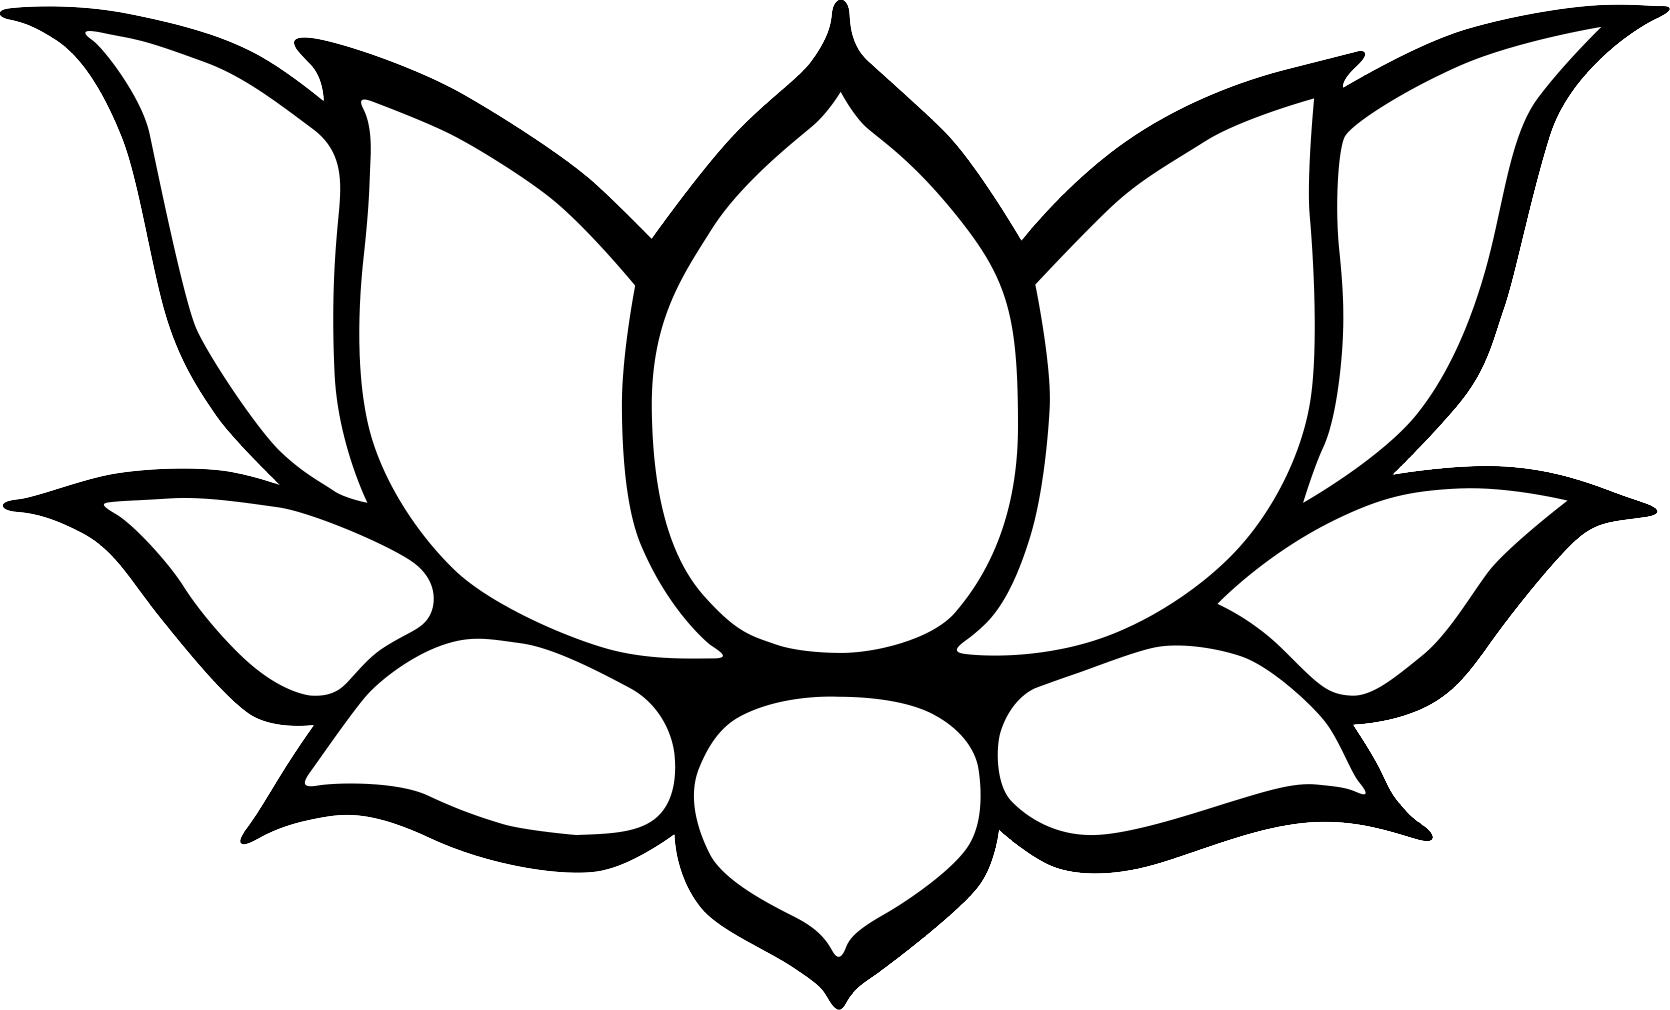 Lotus Flower Outline 